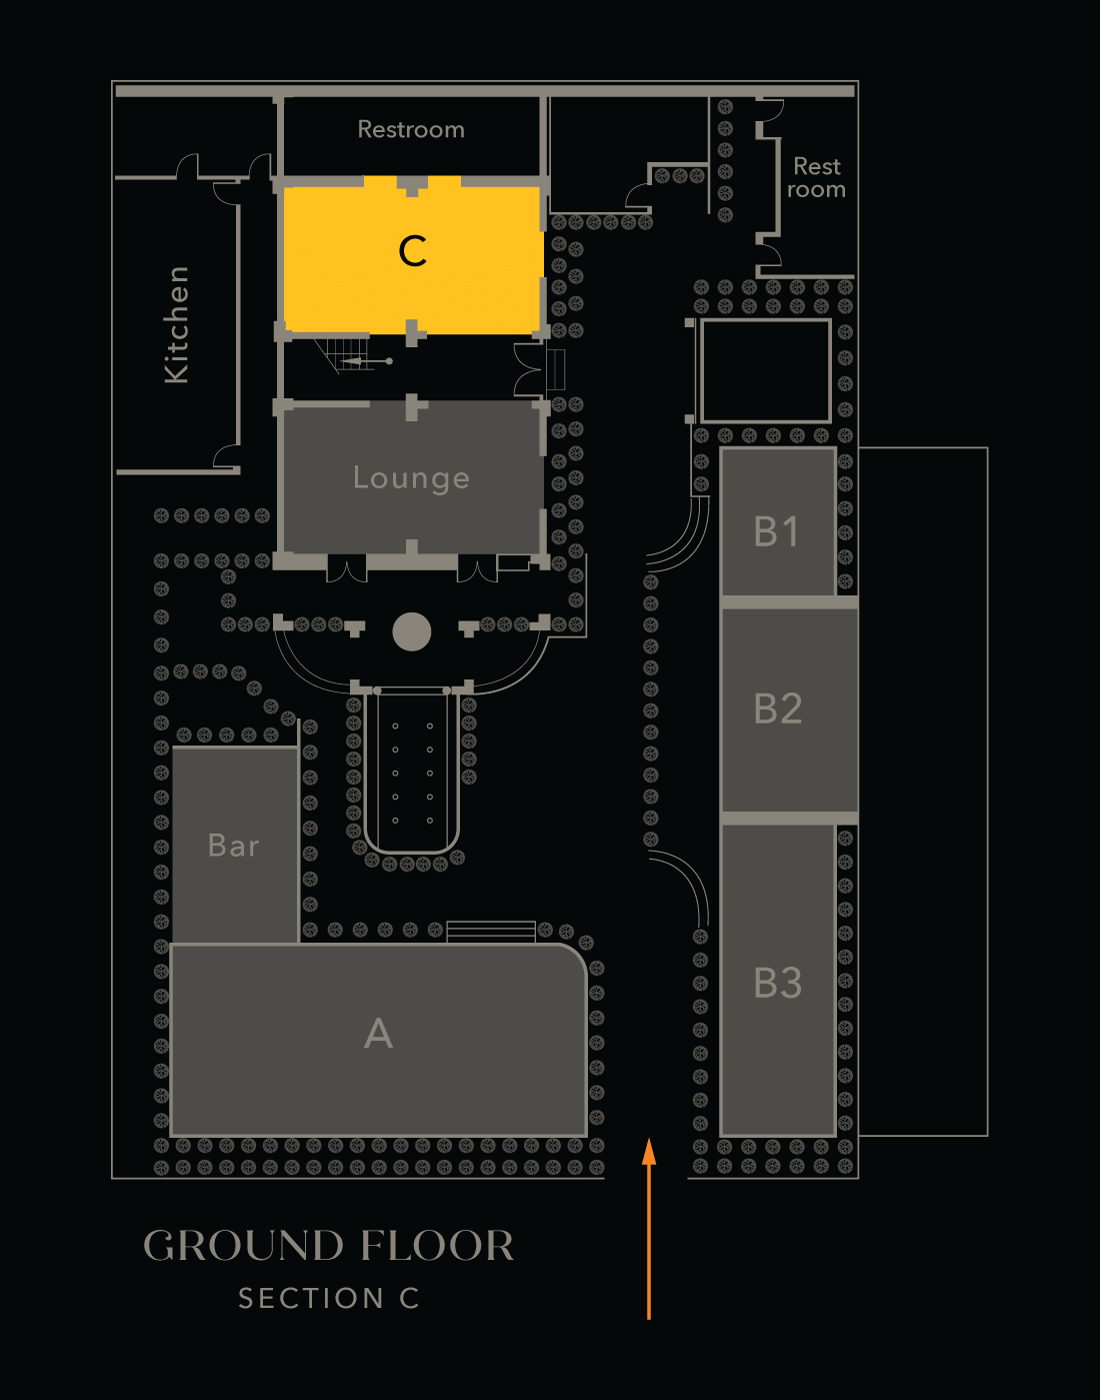 Section C - Ground Floor